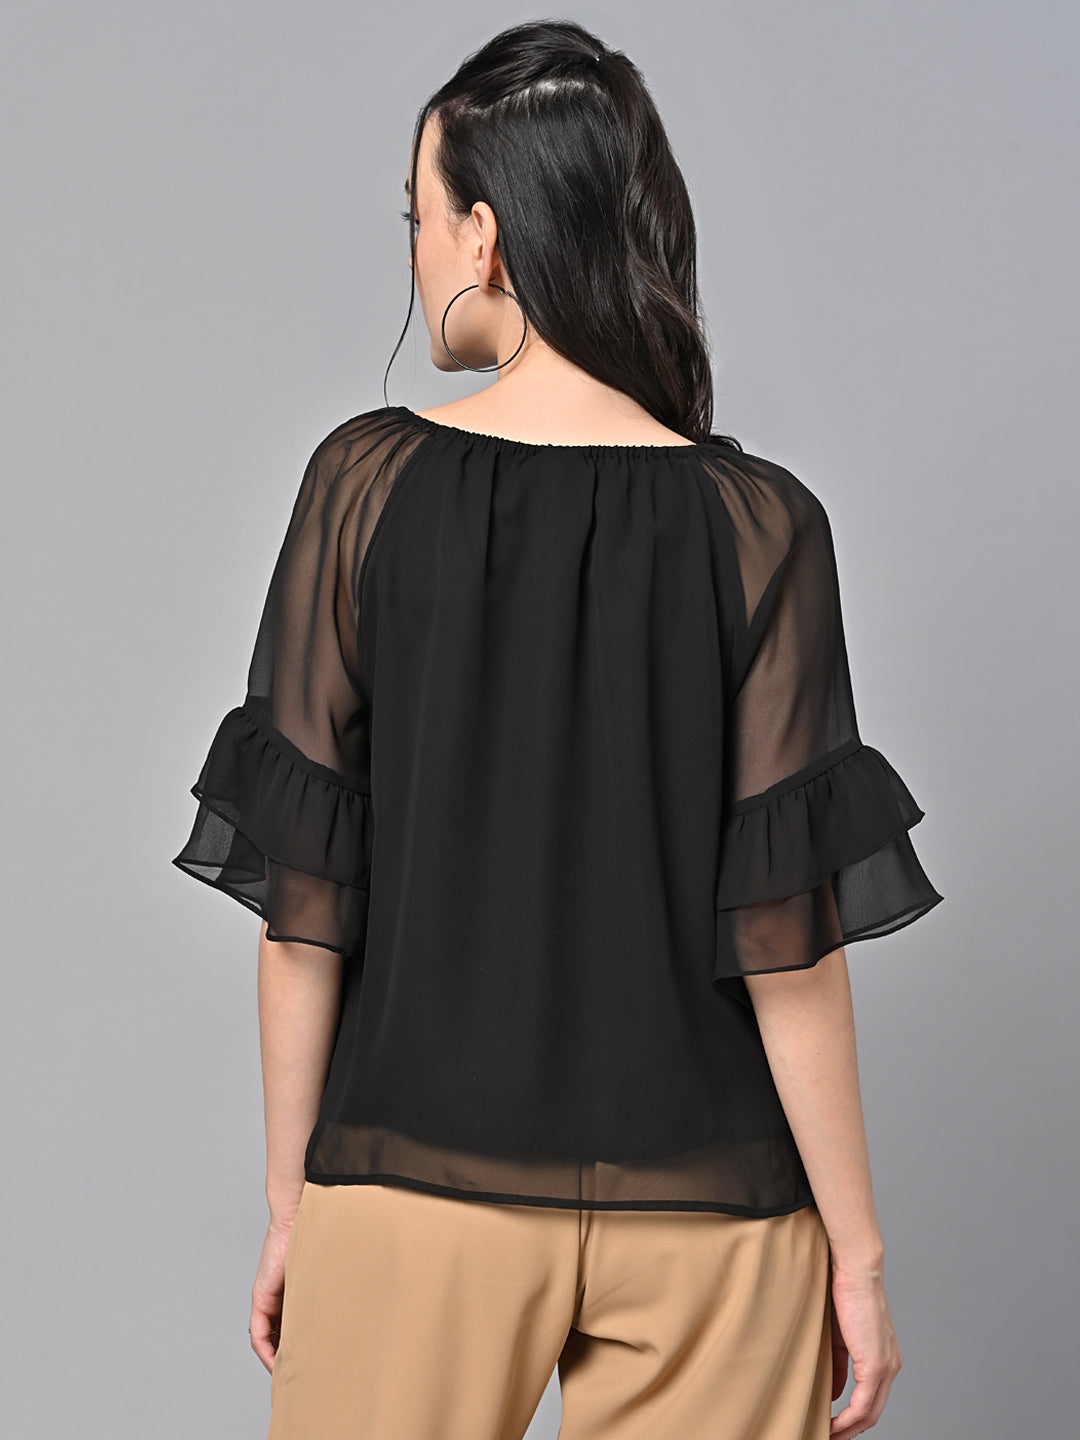 Valbone Women’s Black Color Solid Top With Half-Sleeves